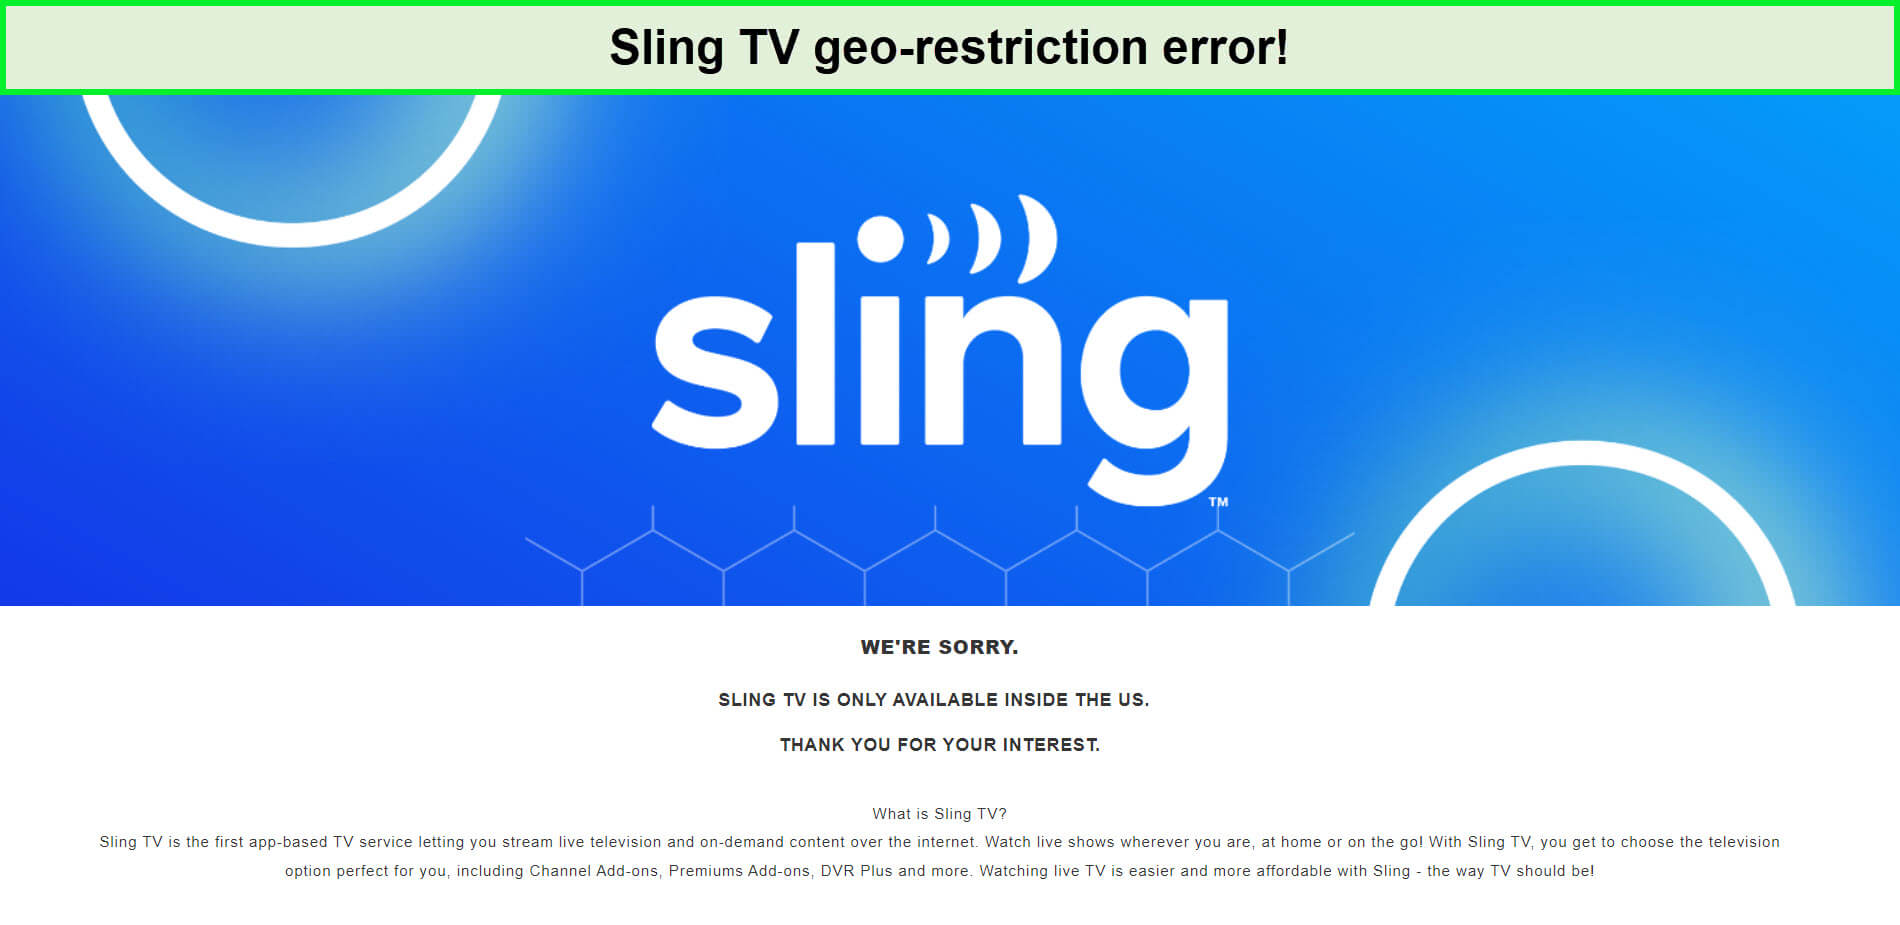 sling-geo-restriction-error-in-italy